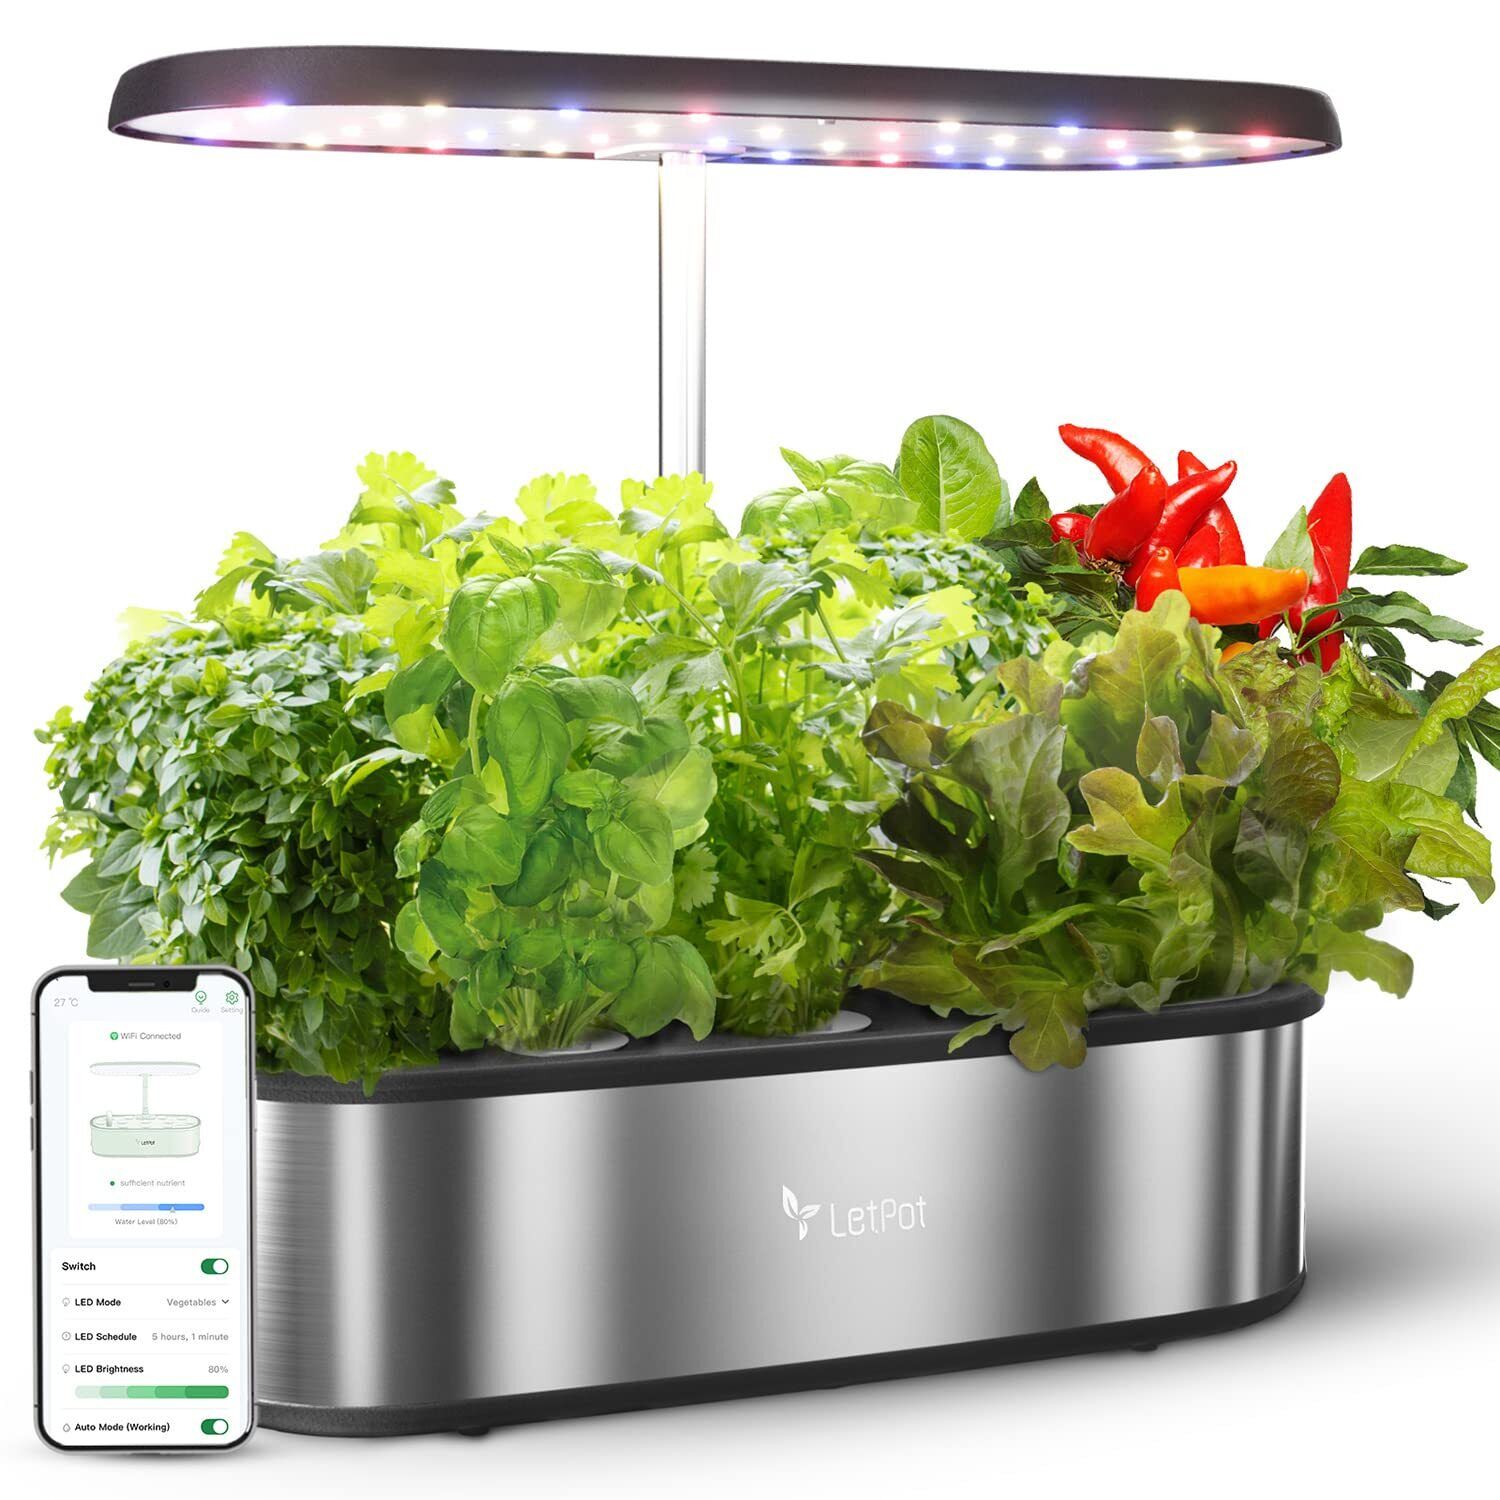 LetPot LPH-SE Hydroponics Growing System 12 Pods Smart Herb Garden Kit Indoor...